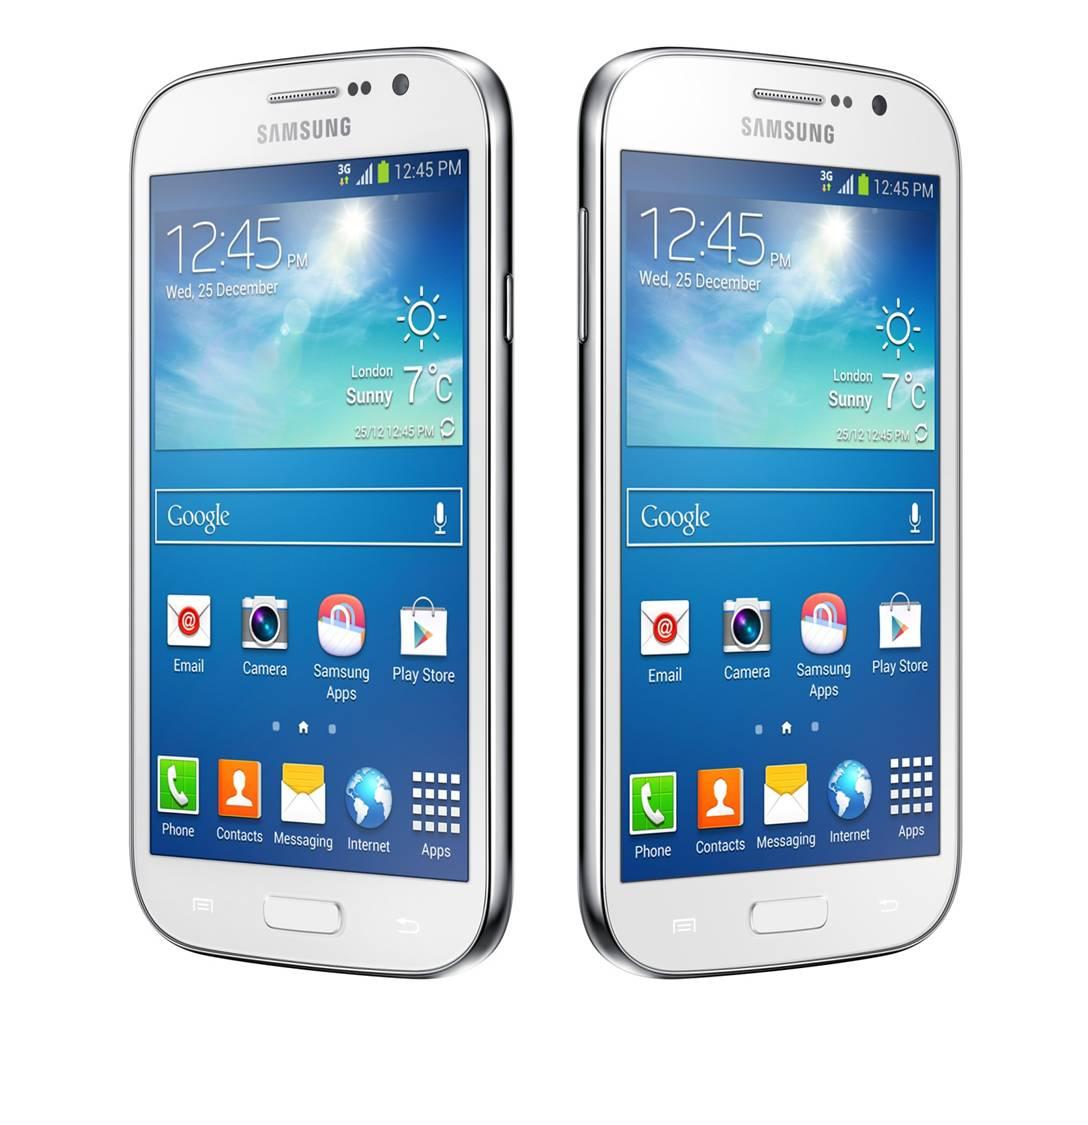 Samsung Galaxy 4 Neo